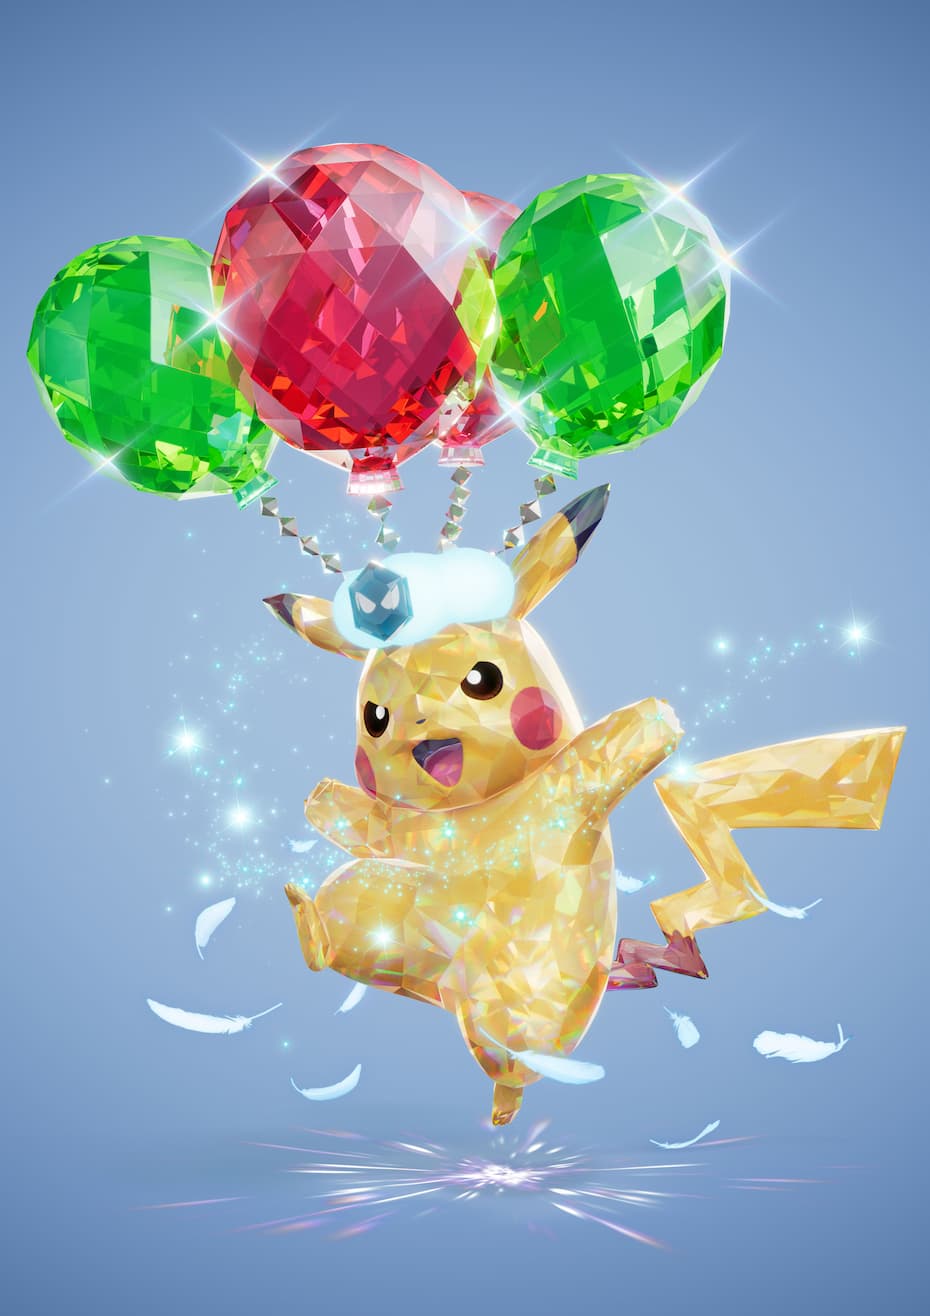 Special Pikachu art